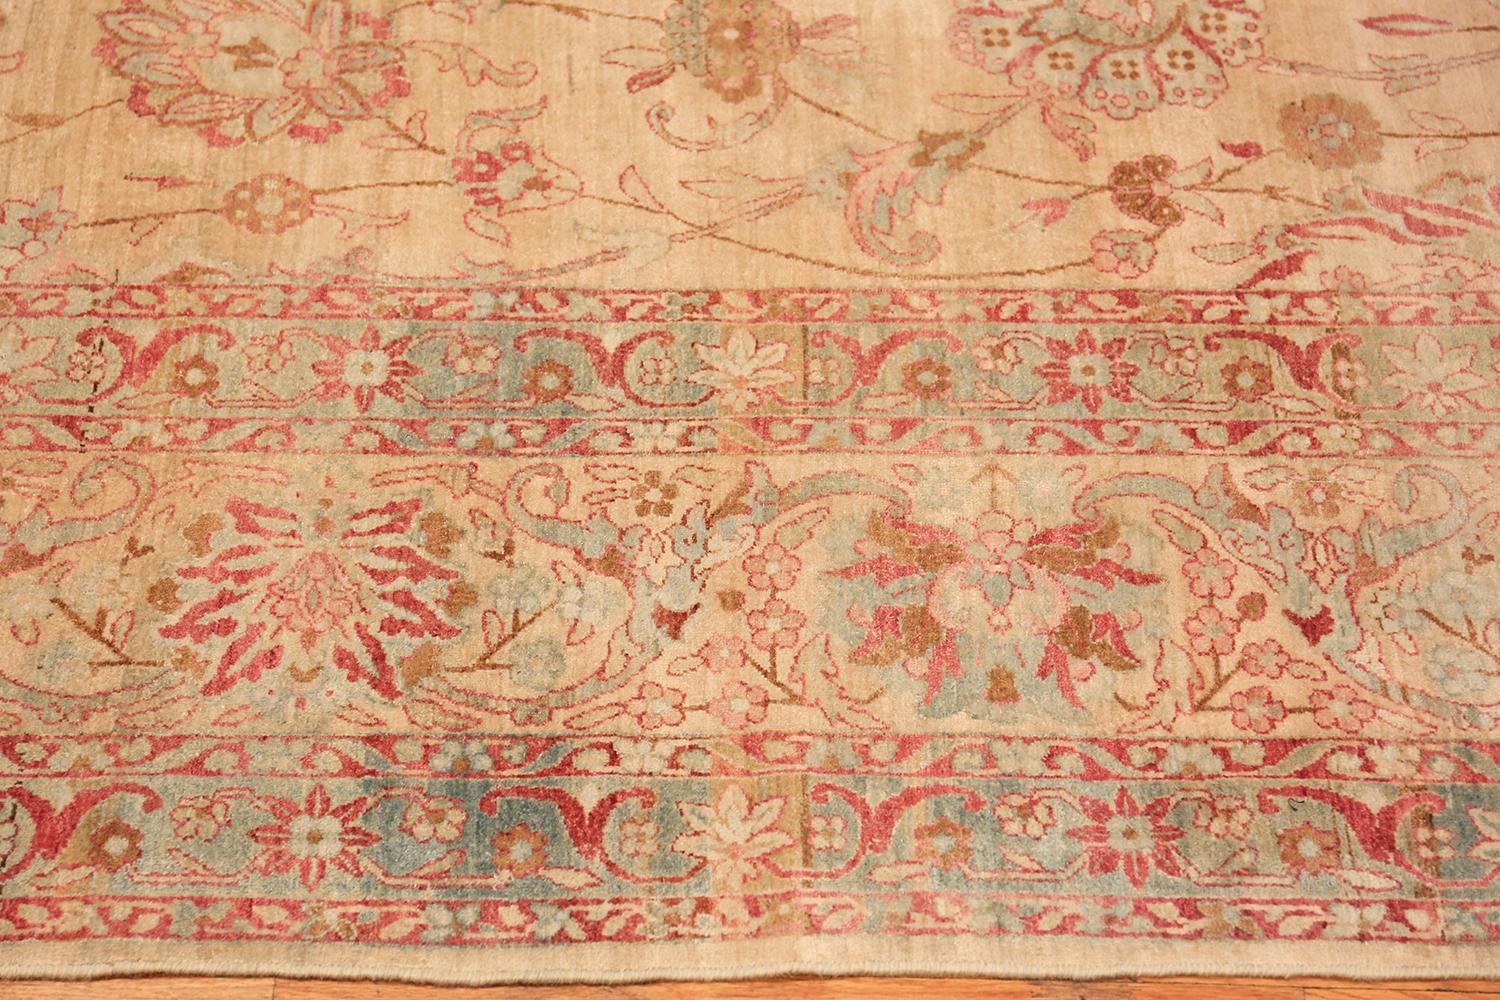 Fine antique Persian Kerman vase design rug, country of origin: Persia, date circa 1920. Size: 9 ft. x 14 ft. 4 in (2.74 m x 4.37 m).